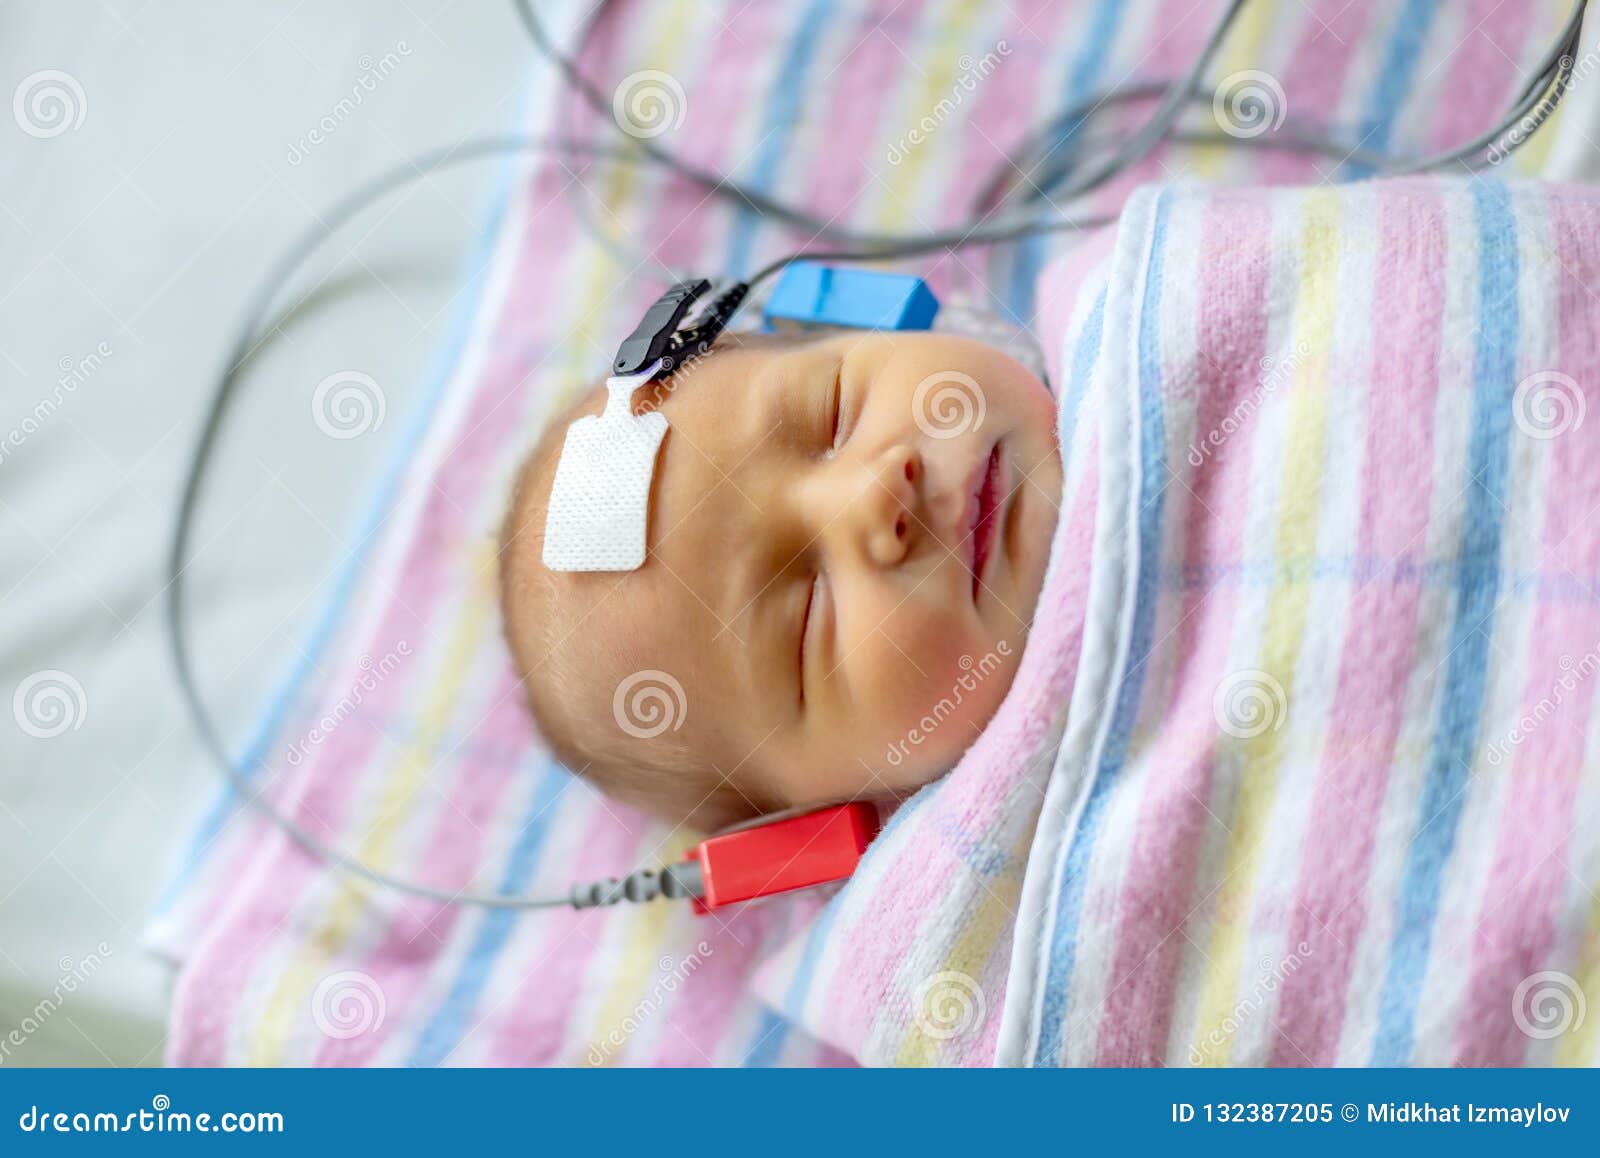 hearing test of a sleeping newborn at hospital